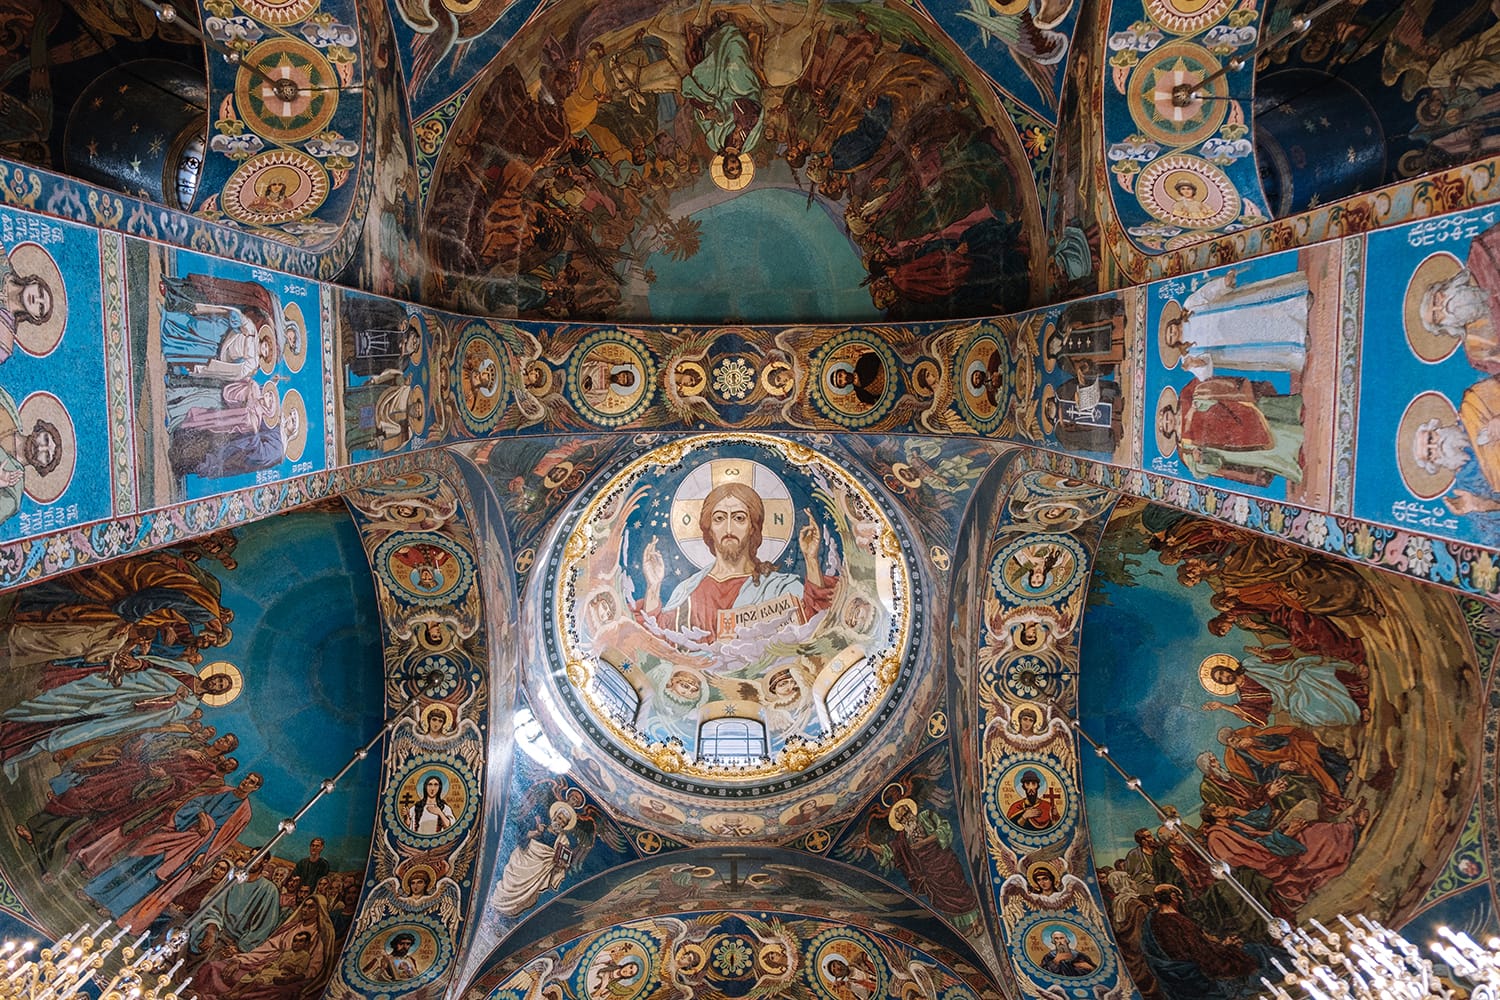 The Sistine Chapel ceiling